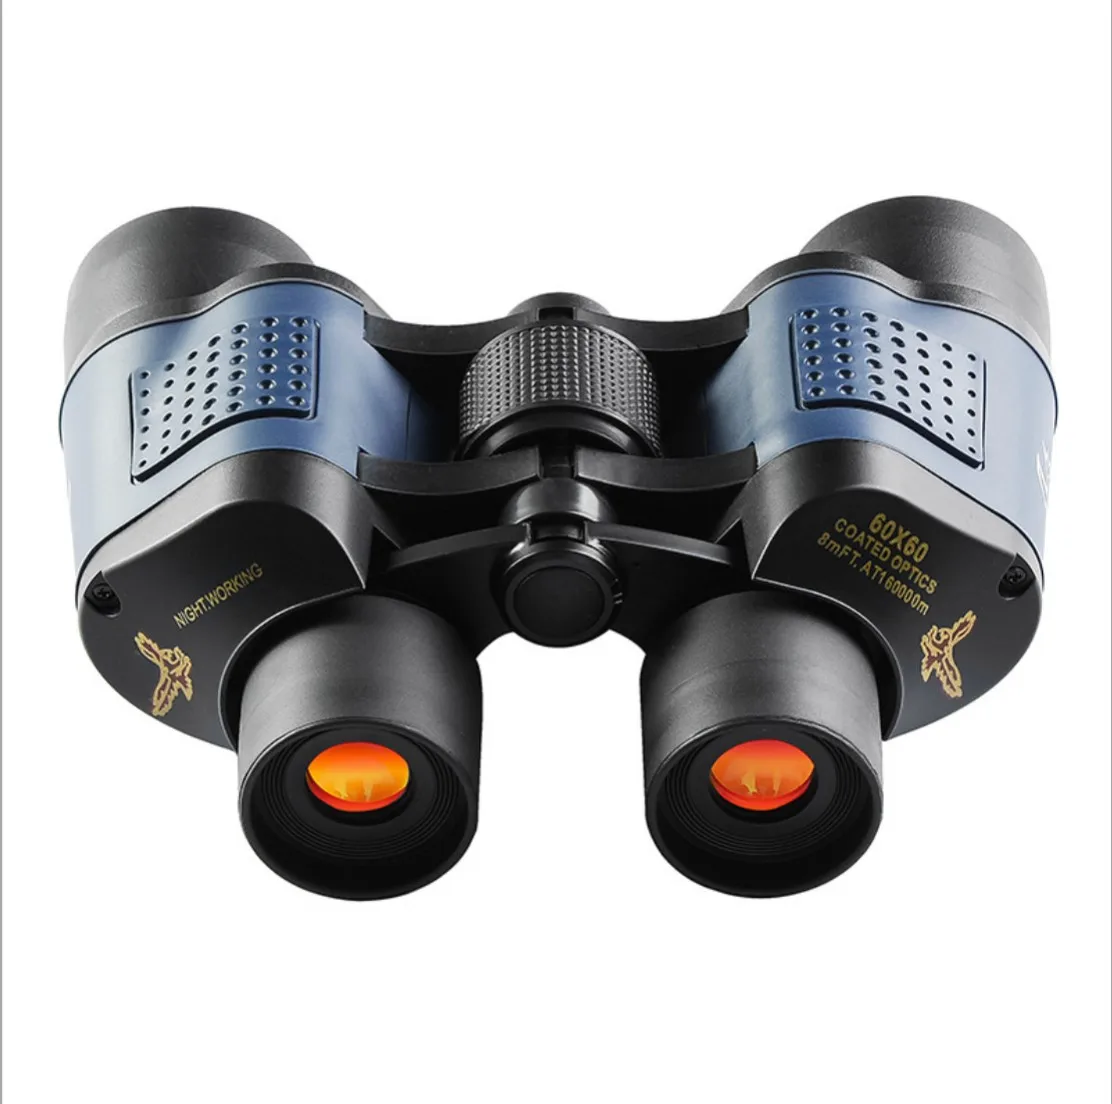 

Telescope 60X60 HD Binoculars High Clarity 10000M High Power For Outdoor Hunting Optical Lll Night Vision binocular Fixed Zoom